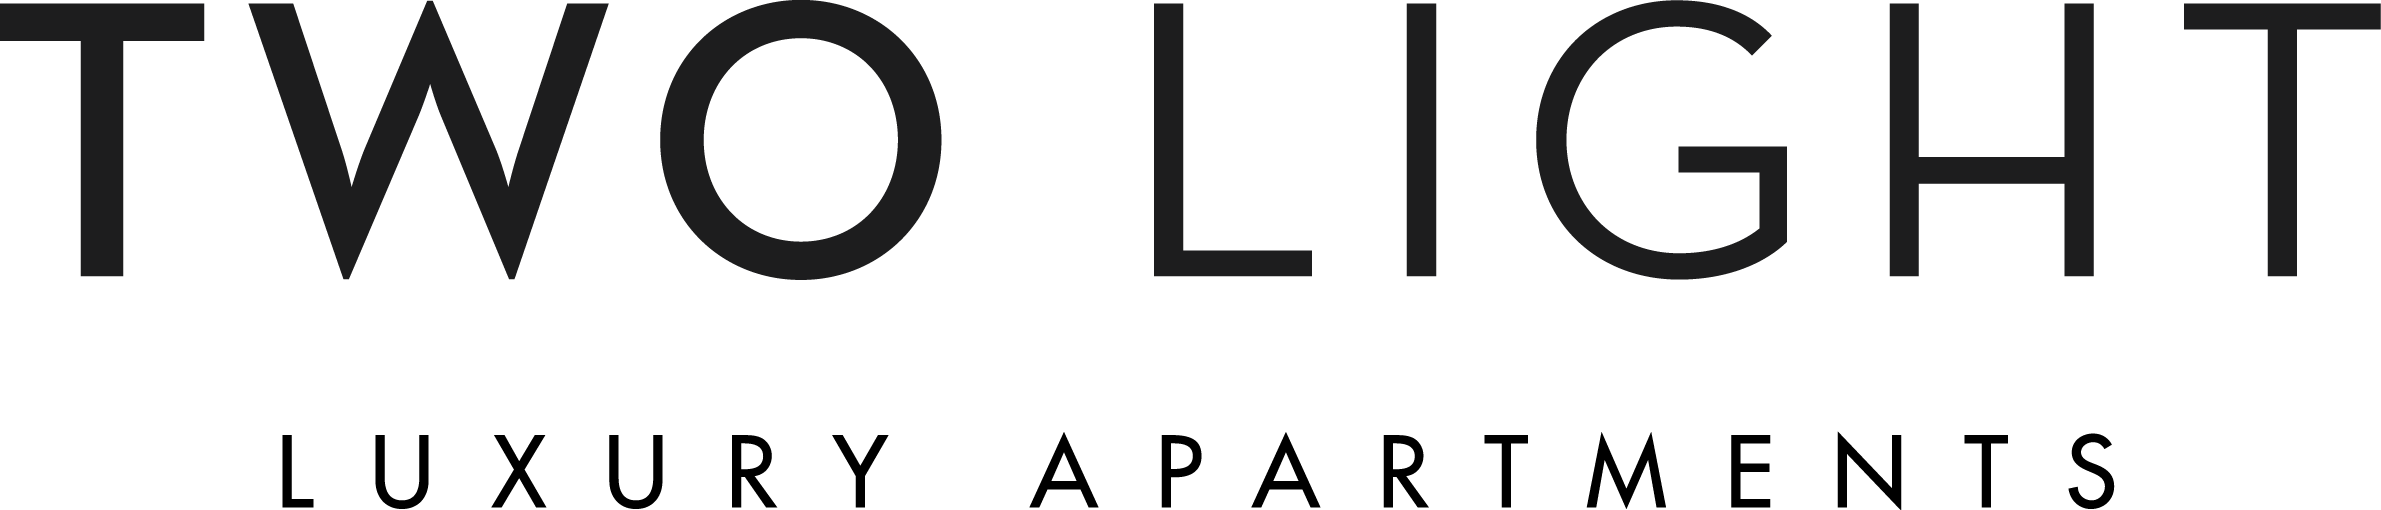 Two Light Luxury Apartments Logo